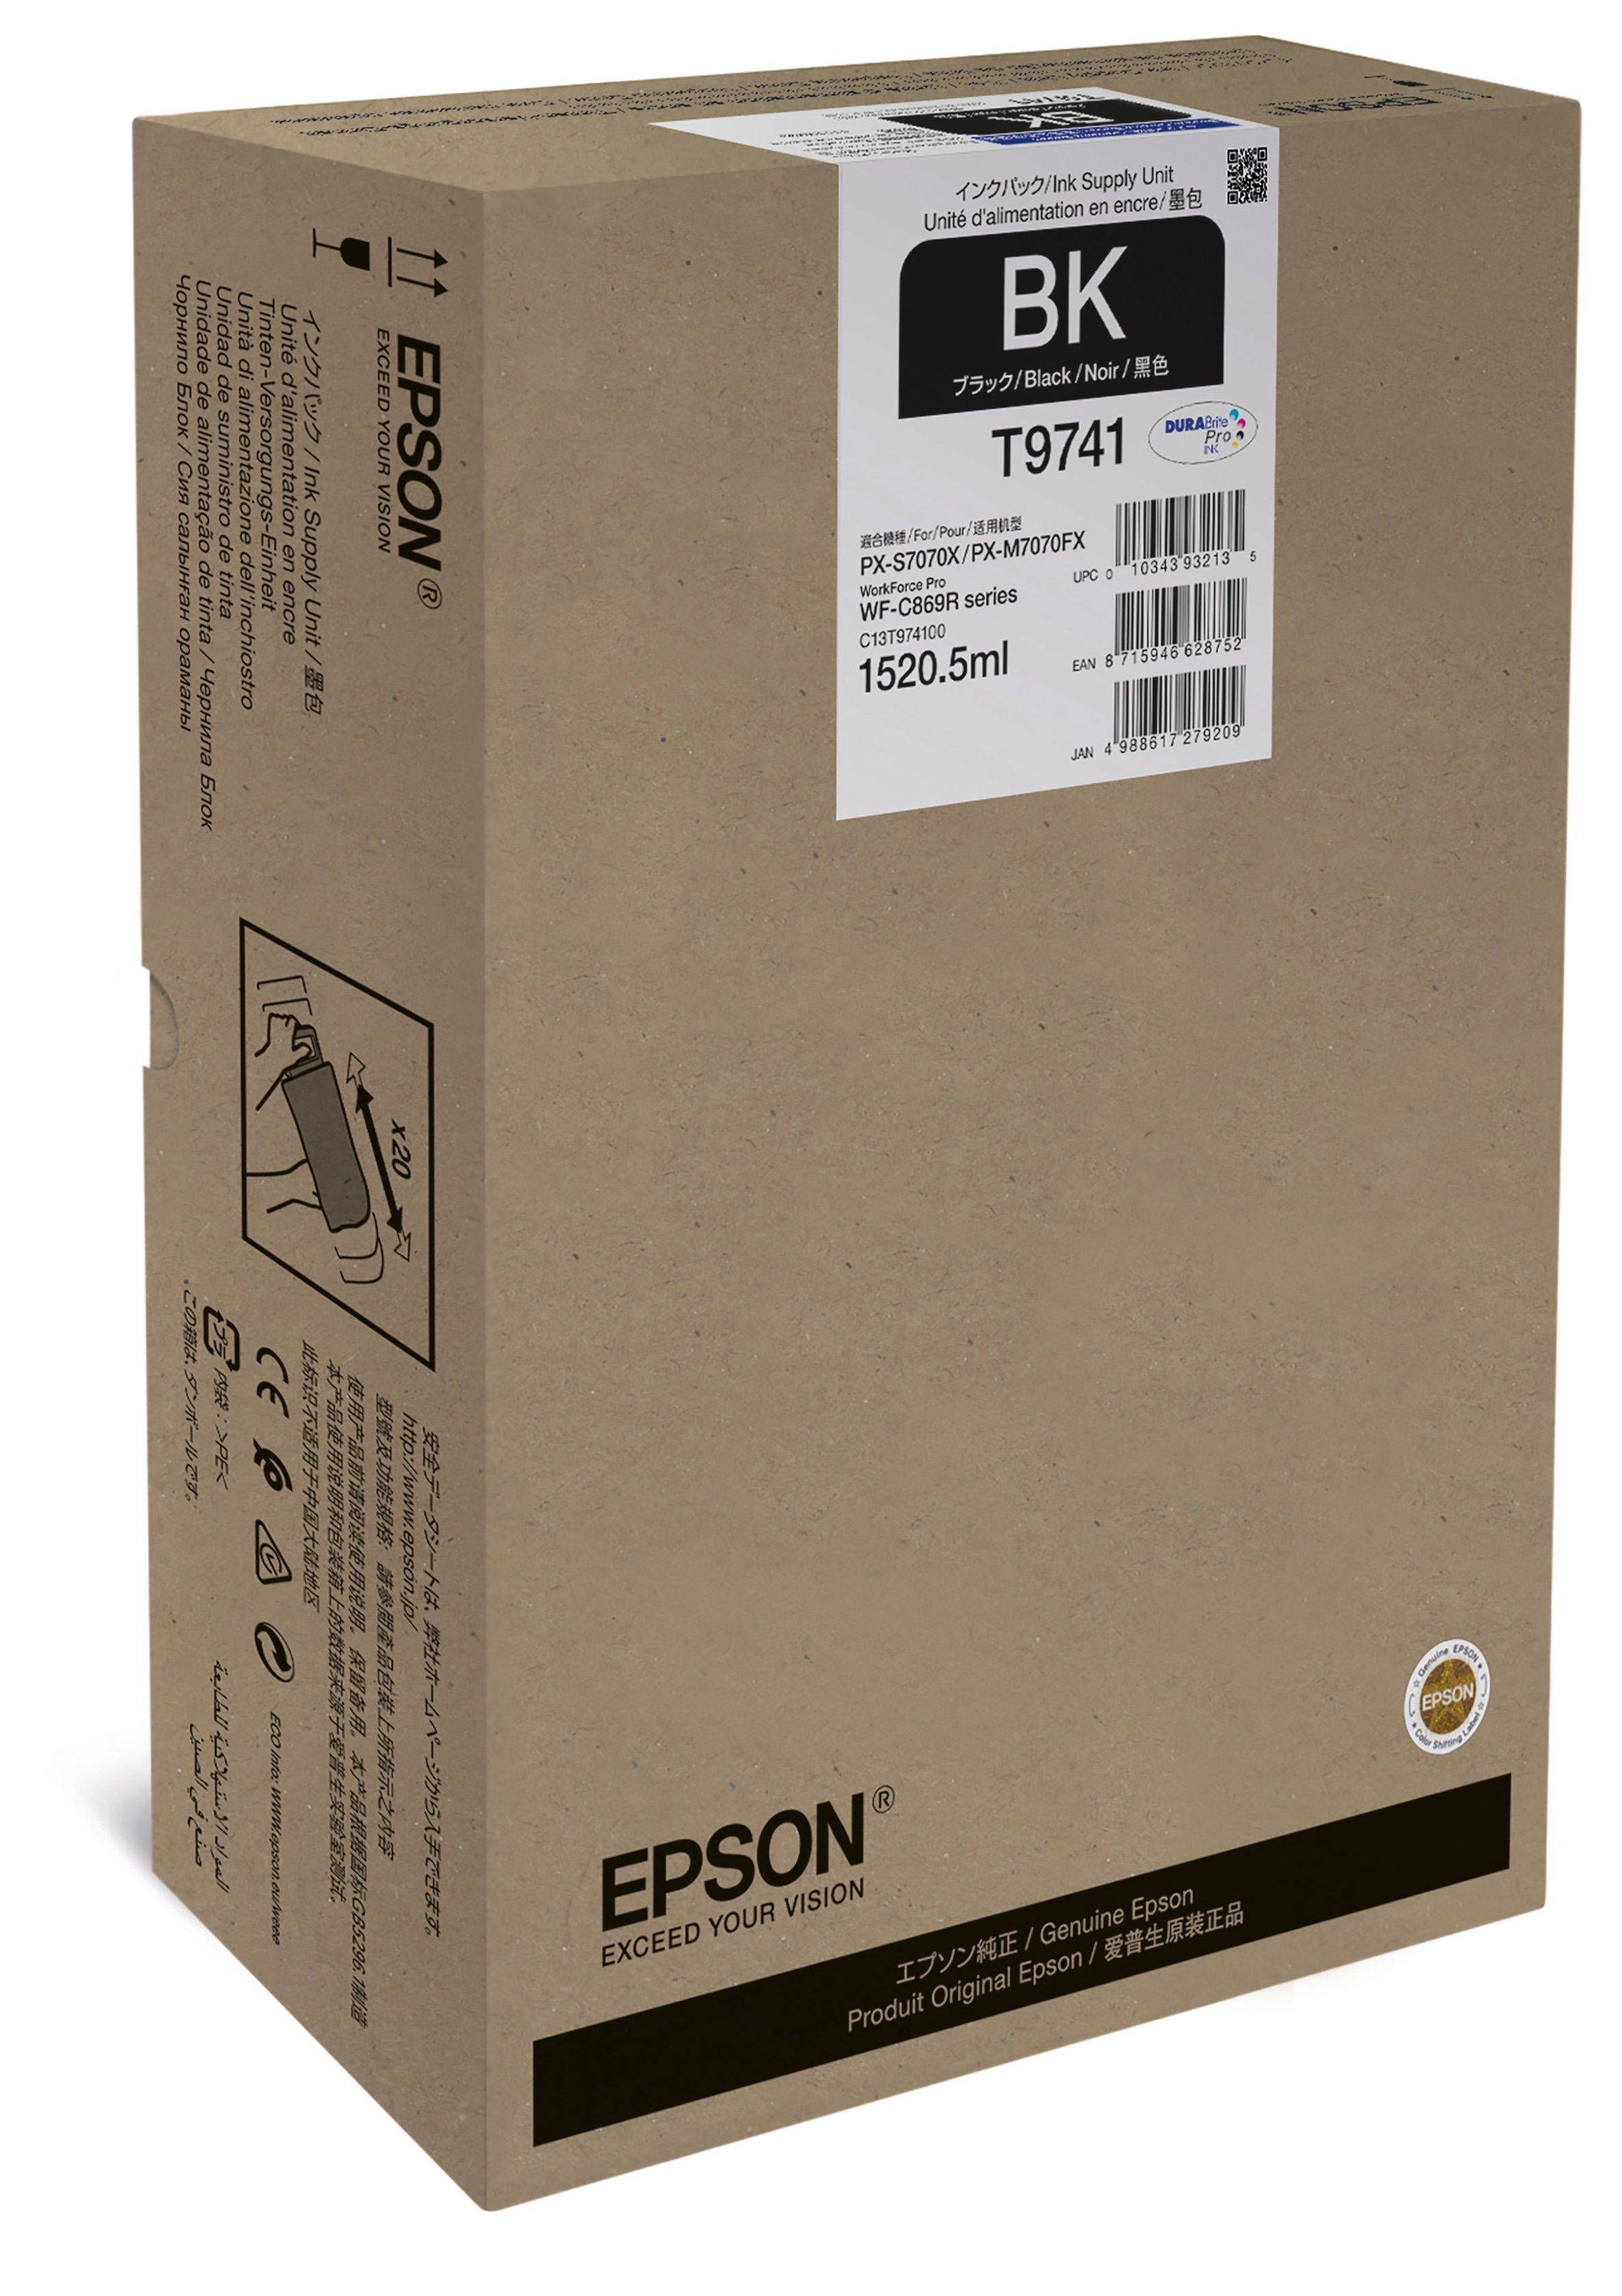 Epson WorkForce Pro WF-C869R Black XXL Ink Supply Unit